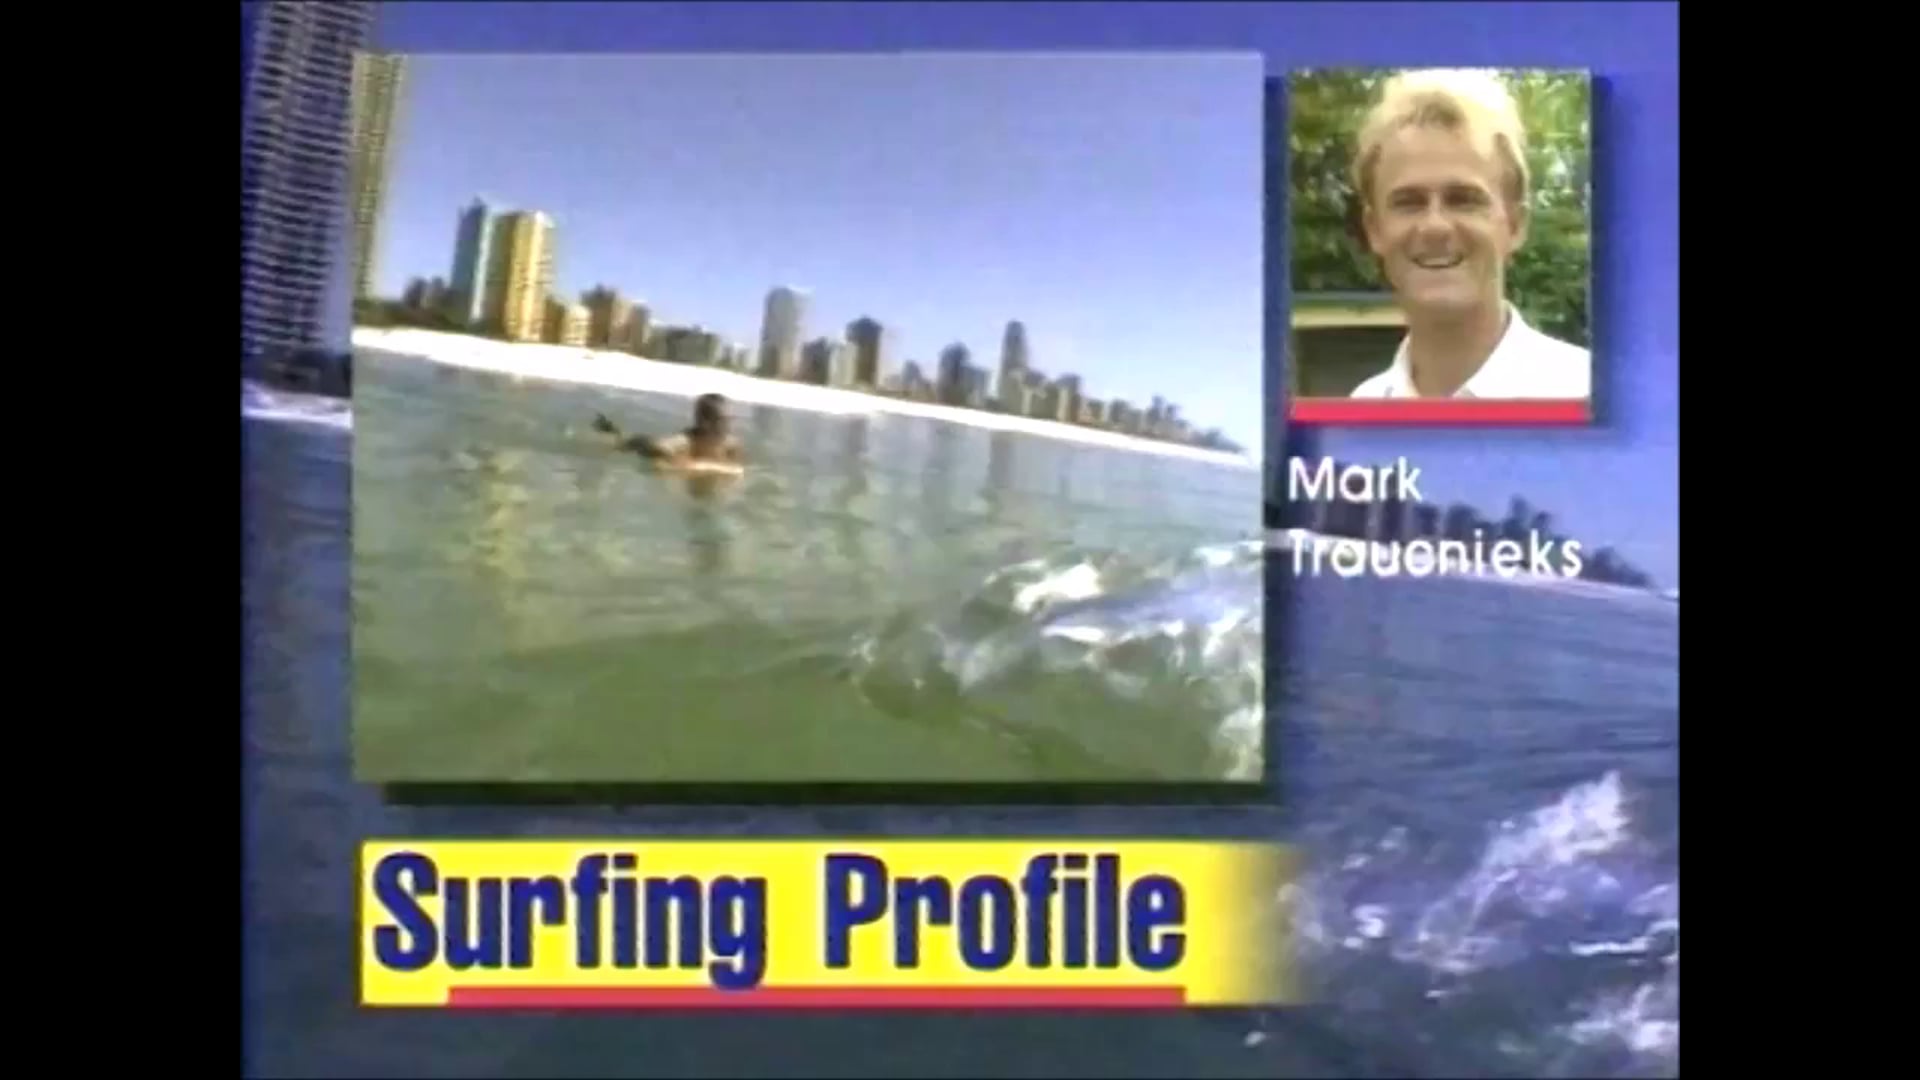 Mark “Trout” Traucnieks – April 1995